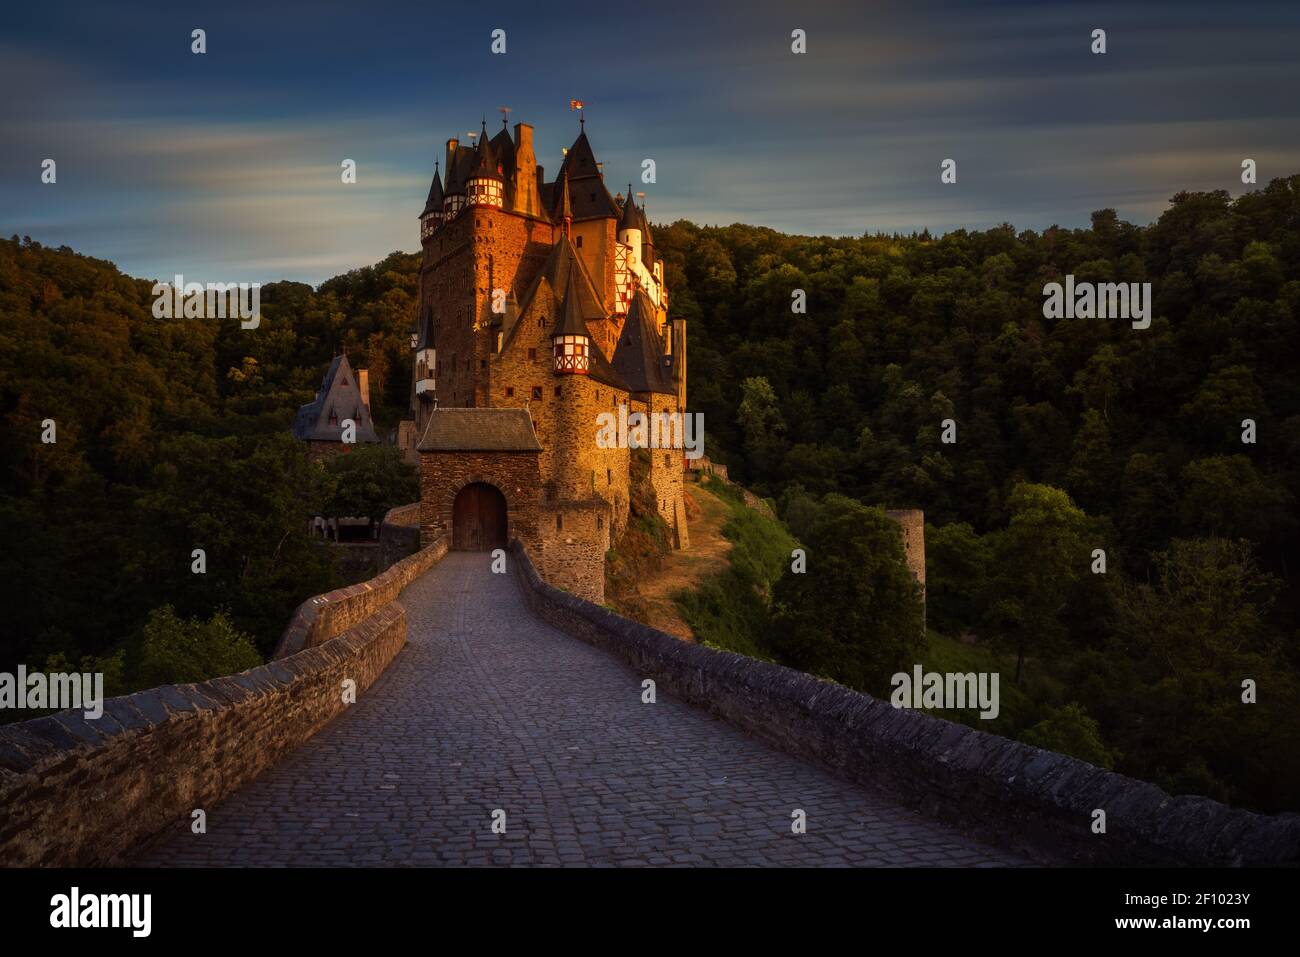 Eltz Castle and stone bridge in sunset light, Germany Stock Photo